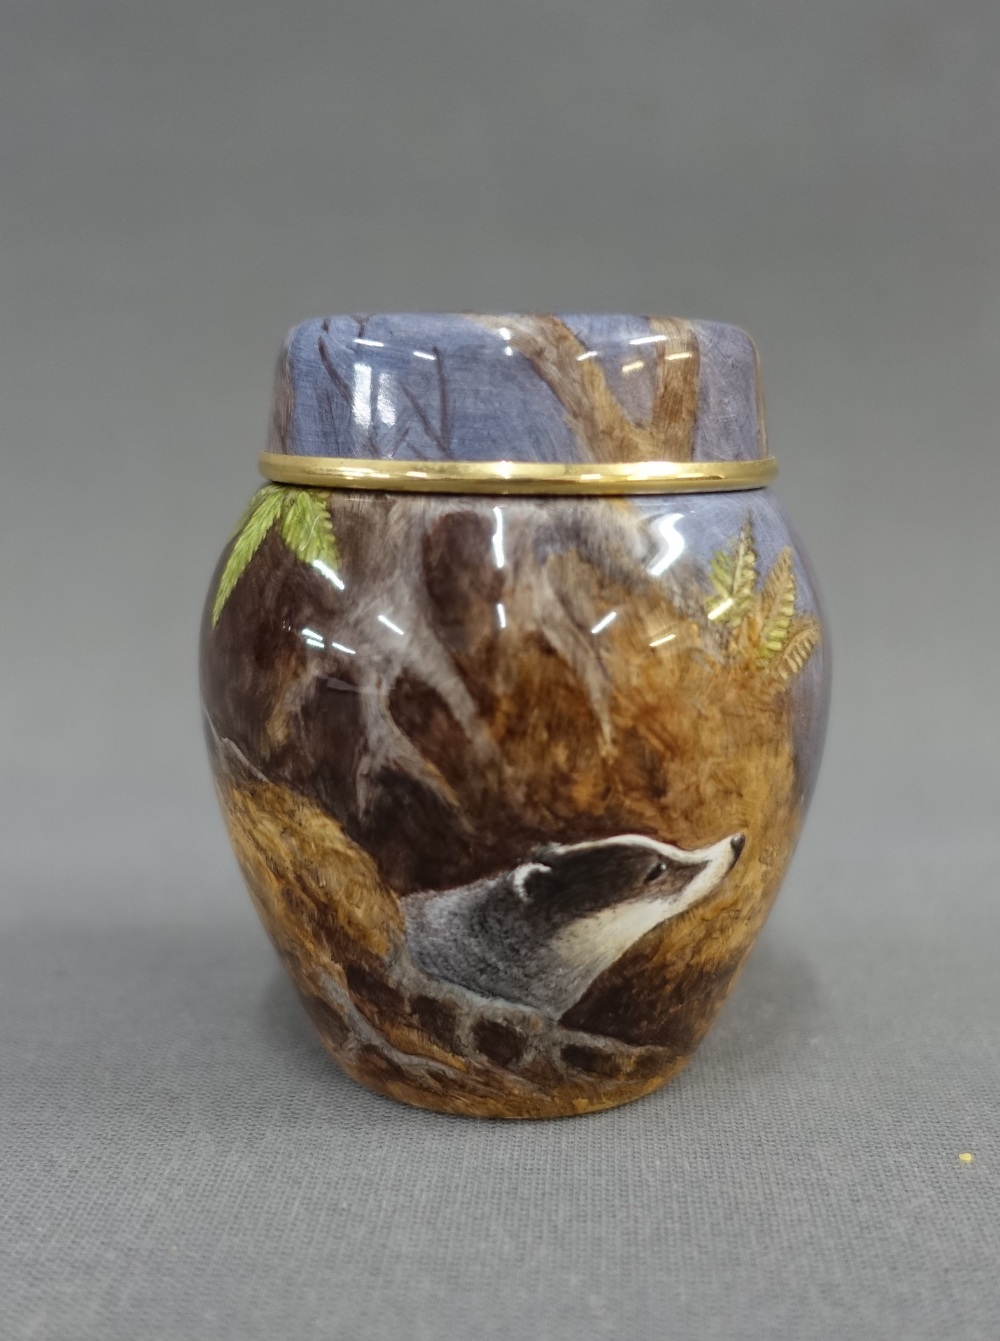 Moorcroft enamel vase and cover with Badger pattern, Ltd Ed No. 24/ 50, 7.5cm high